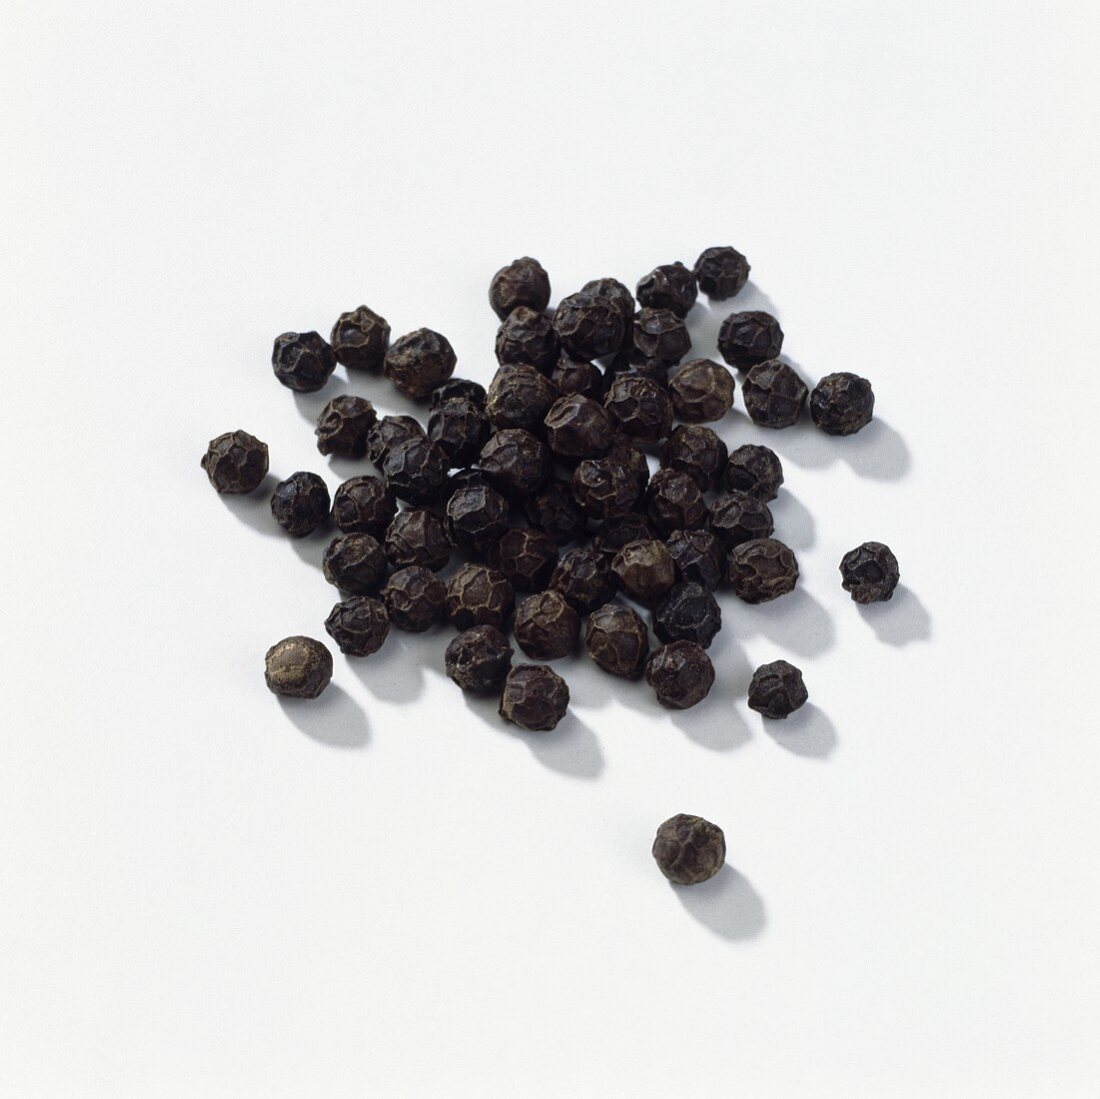 Black peppercorns (Piper nigrum)